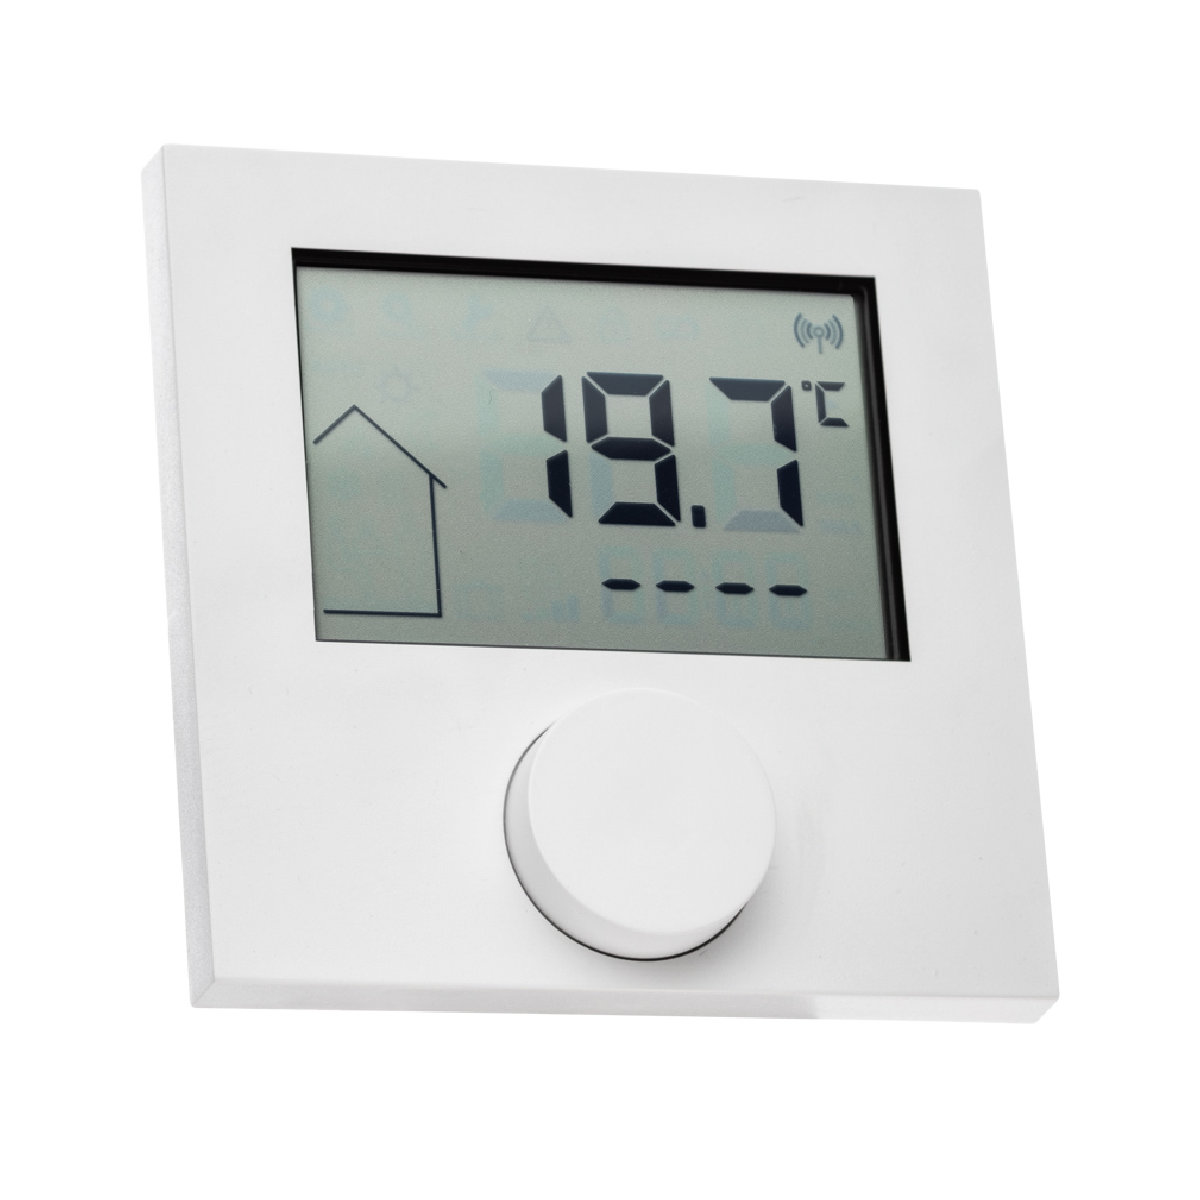 Raum Thermostat Raumtemperaturregler LCD Bildschirm Digital Fußbodenheizung